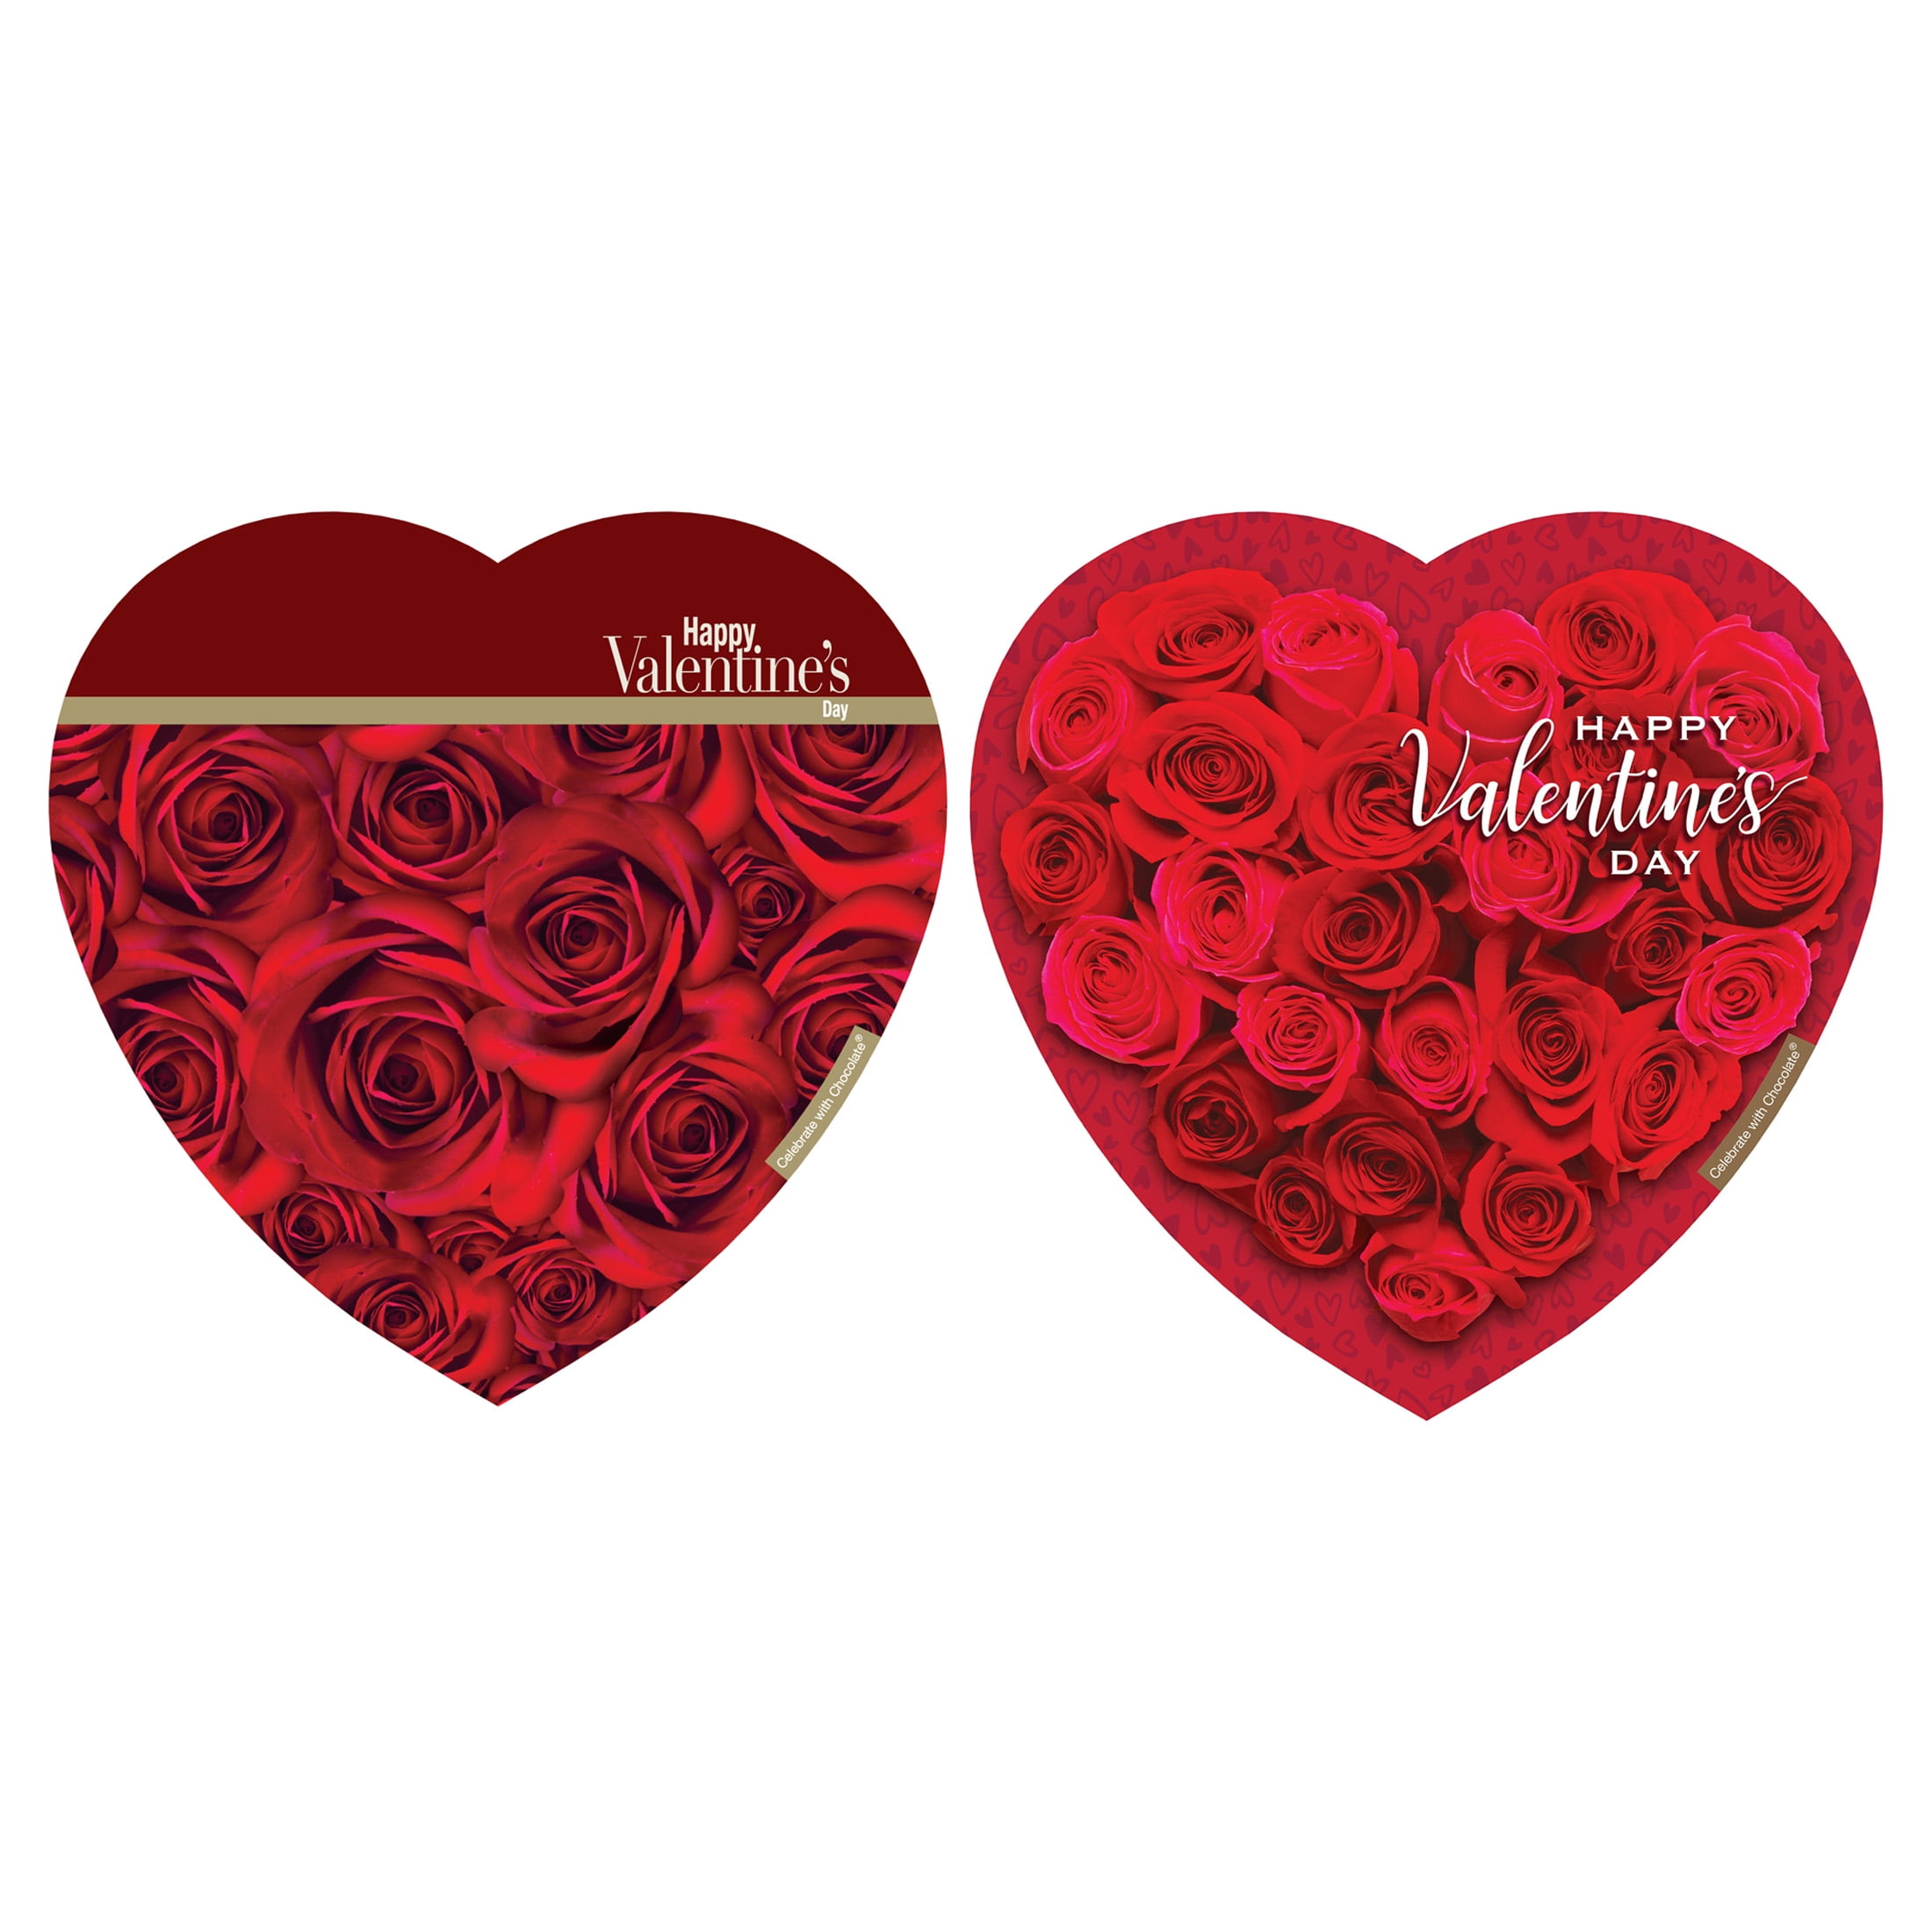 Elmer Chocolate Elmer's, 16oz Romantic Red Wrap Valentine Heart, 40 Pieces Assorted Milk & Dark Chocolates